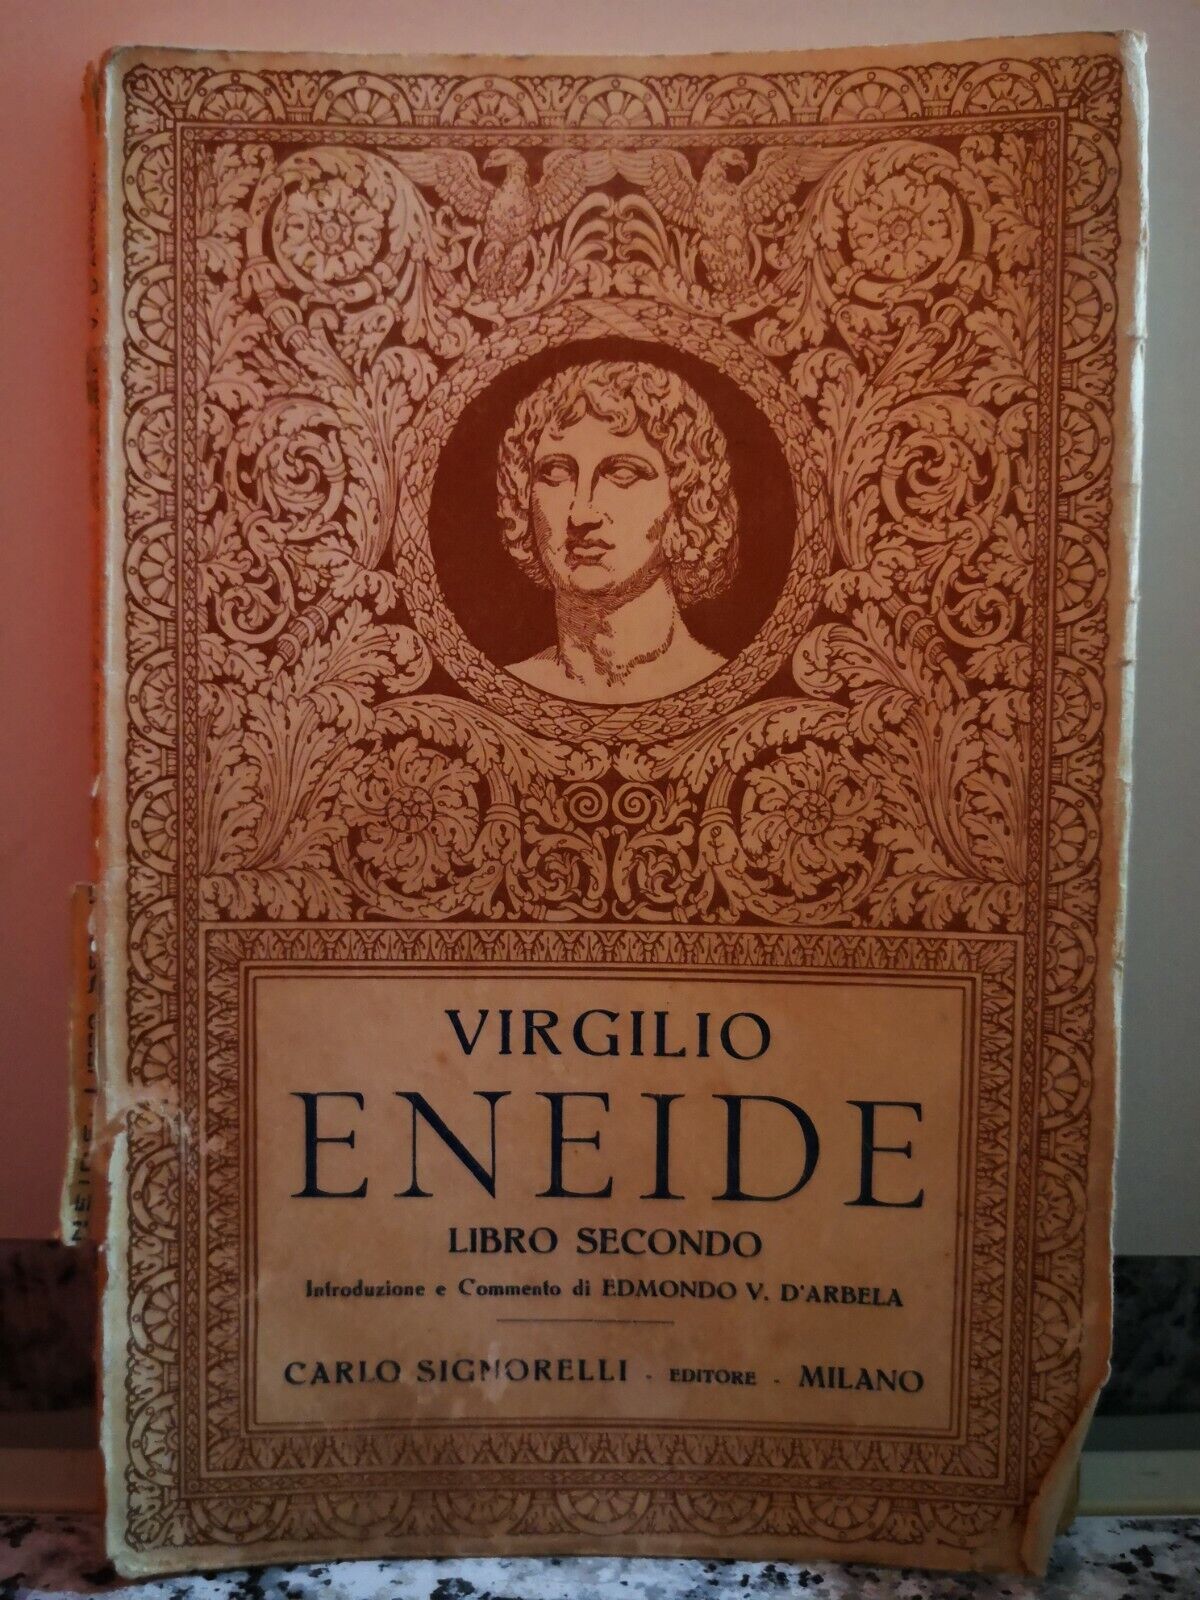  Eneide libro secondo  di Virgilio,  1923,  Signorelli (mi)-F